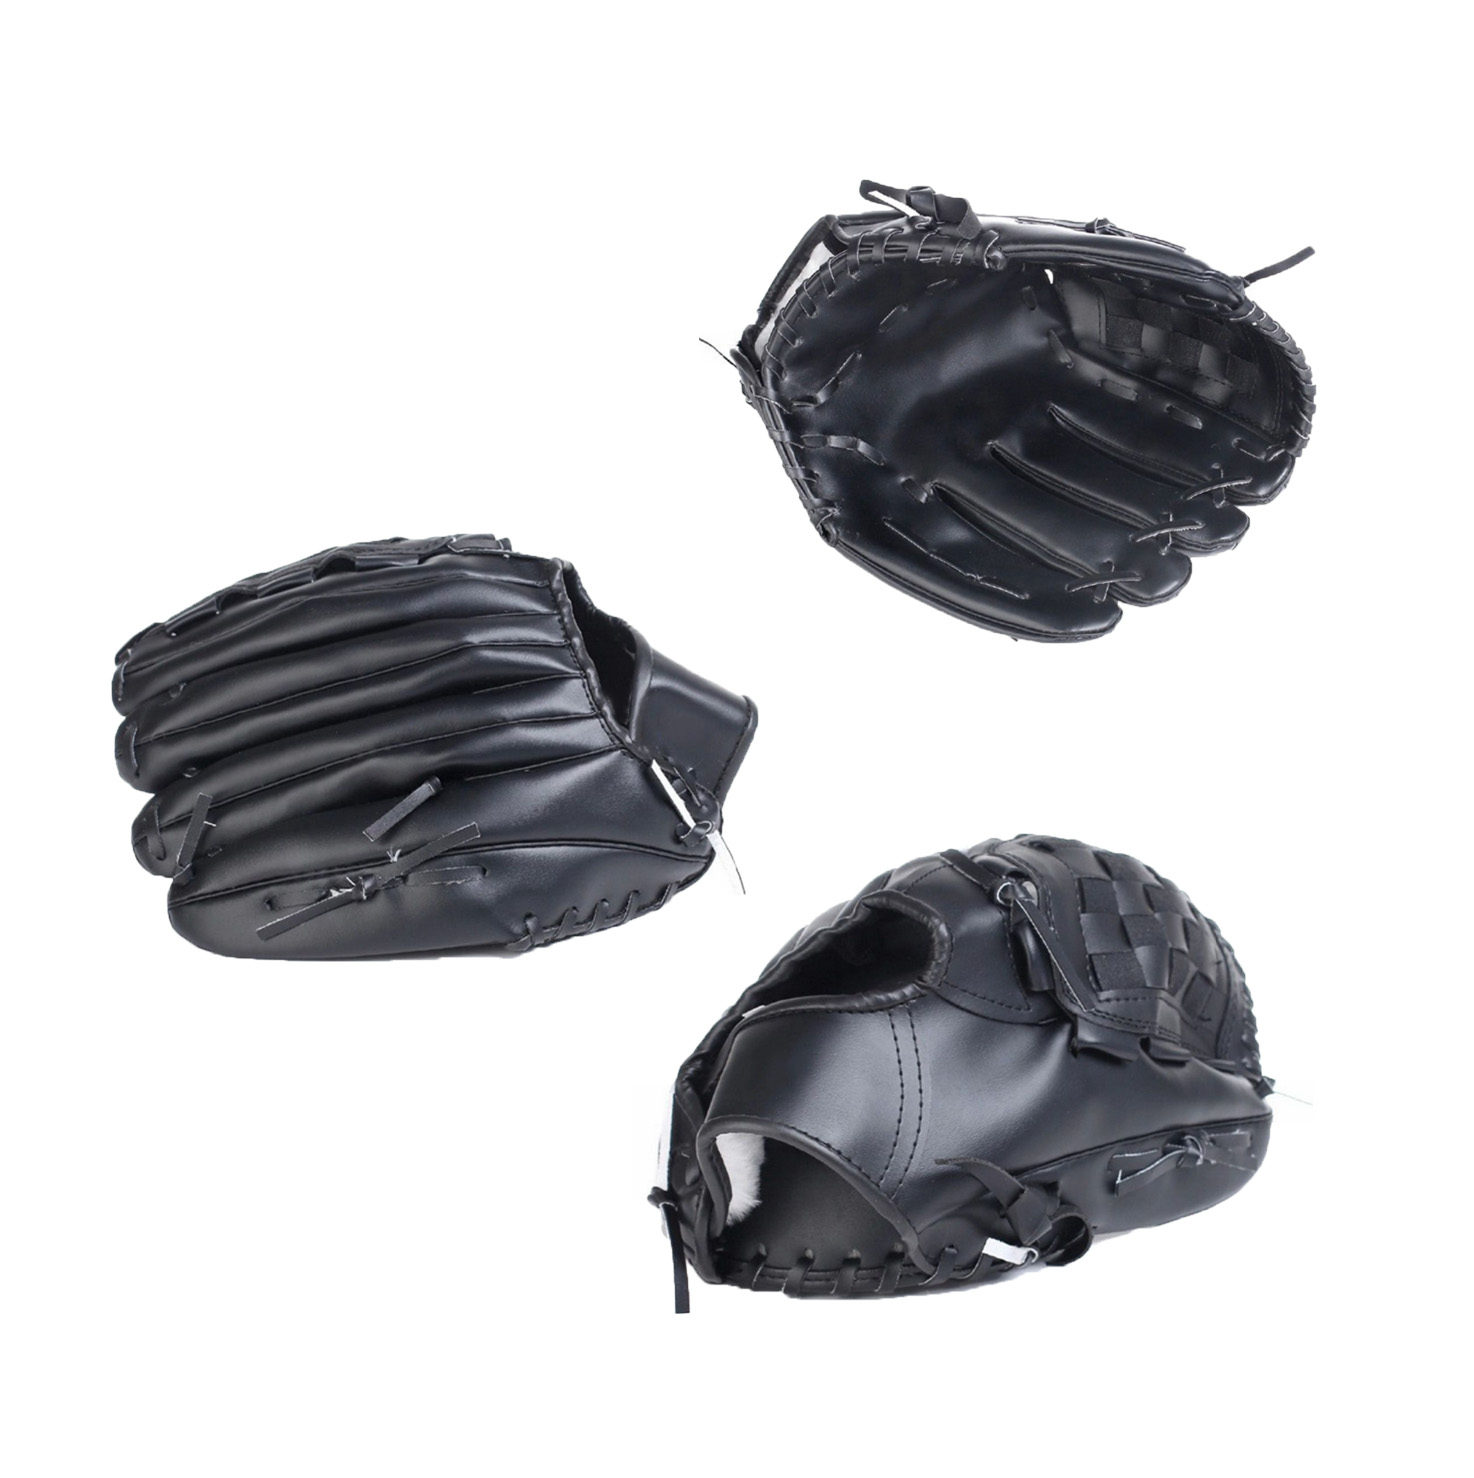 New black softball gloves professional players cheap softball gloves